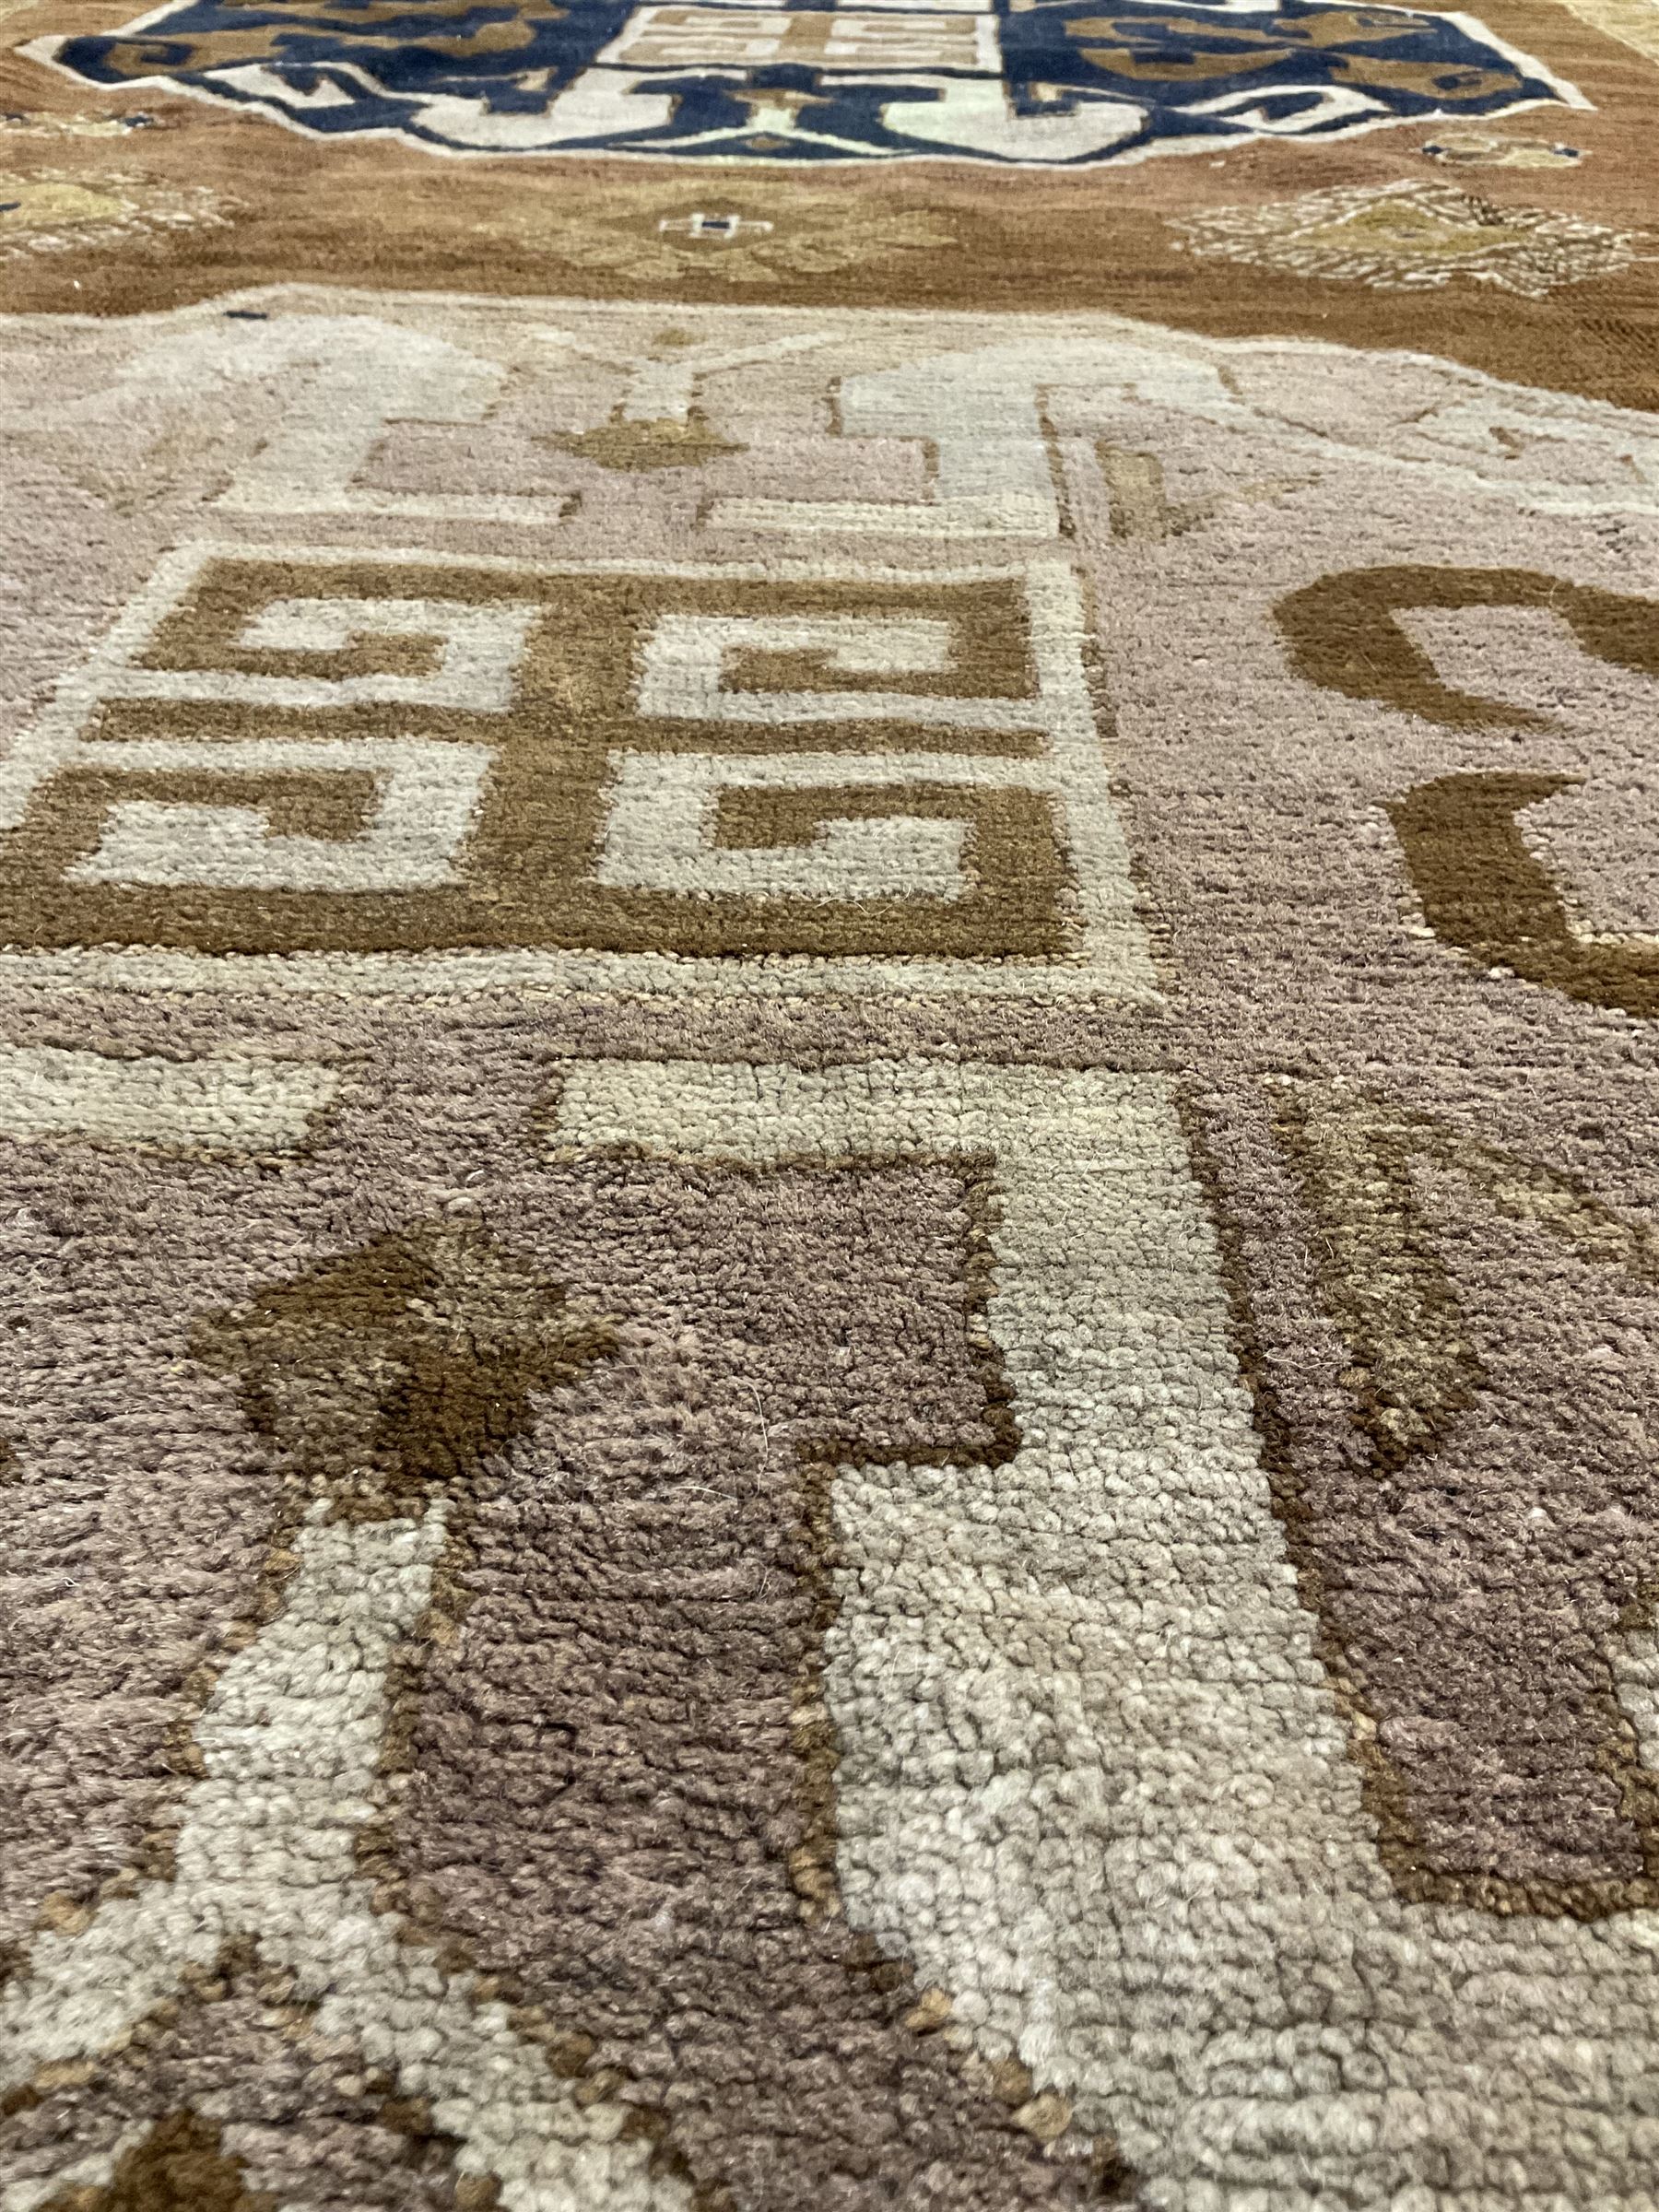 Turkish pale ground rug - Image 3 of 3